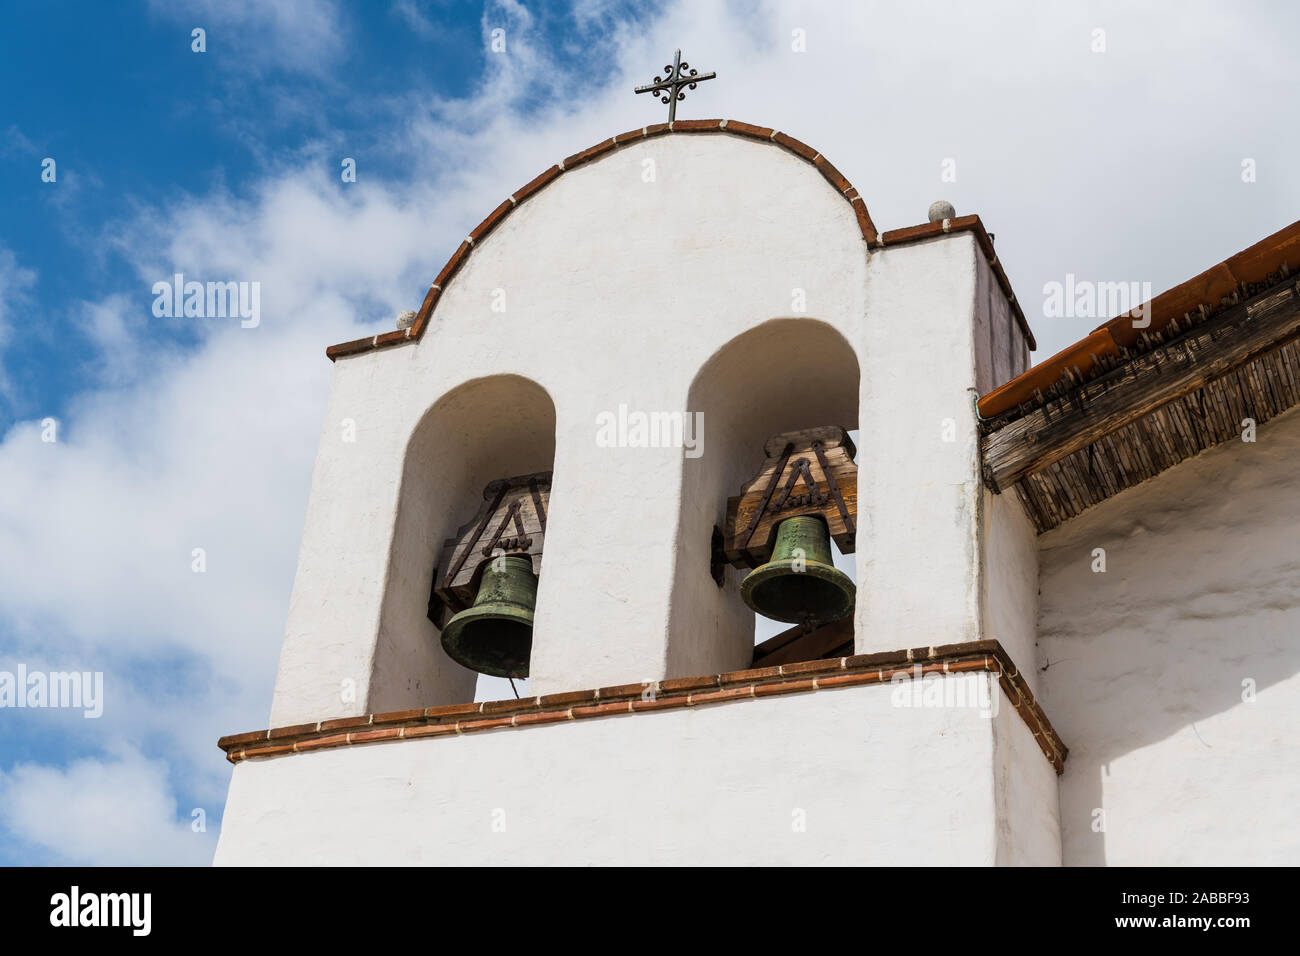 Mission style espagnol blanc historique clocher de l'église à El Presidio de Santa Barbara State Historic Park, Santa Barbara, Californie, USA Banque D'Images